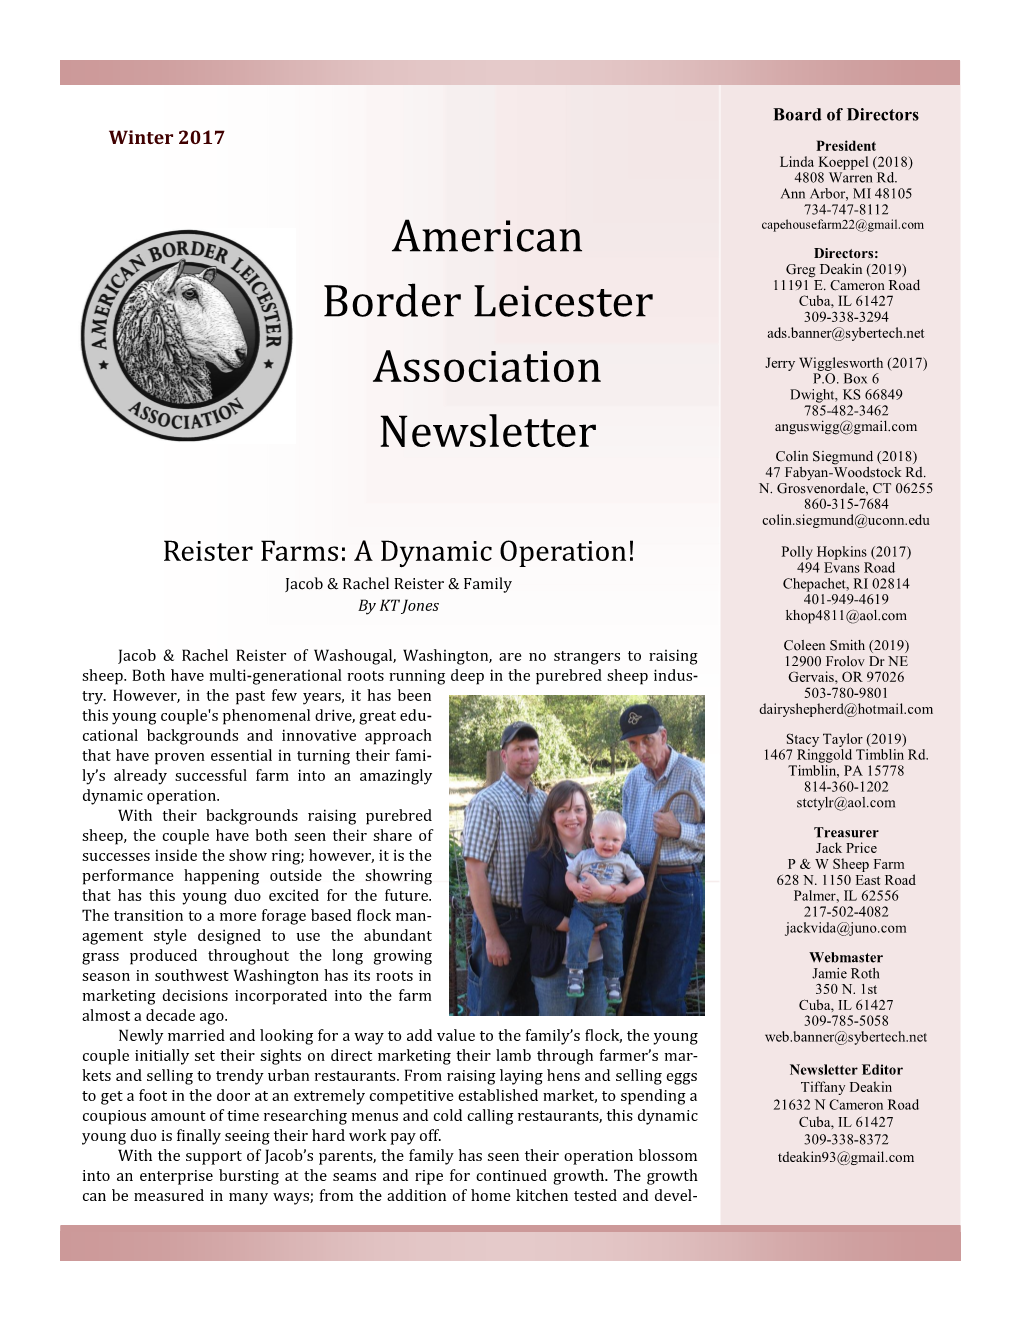 American Border Leicester Association Fall 2017 Newsletter